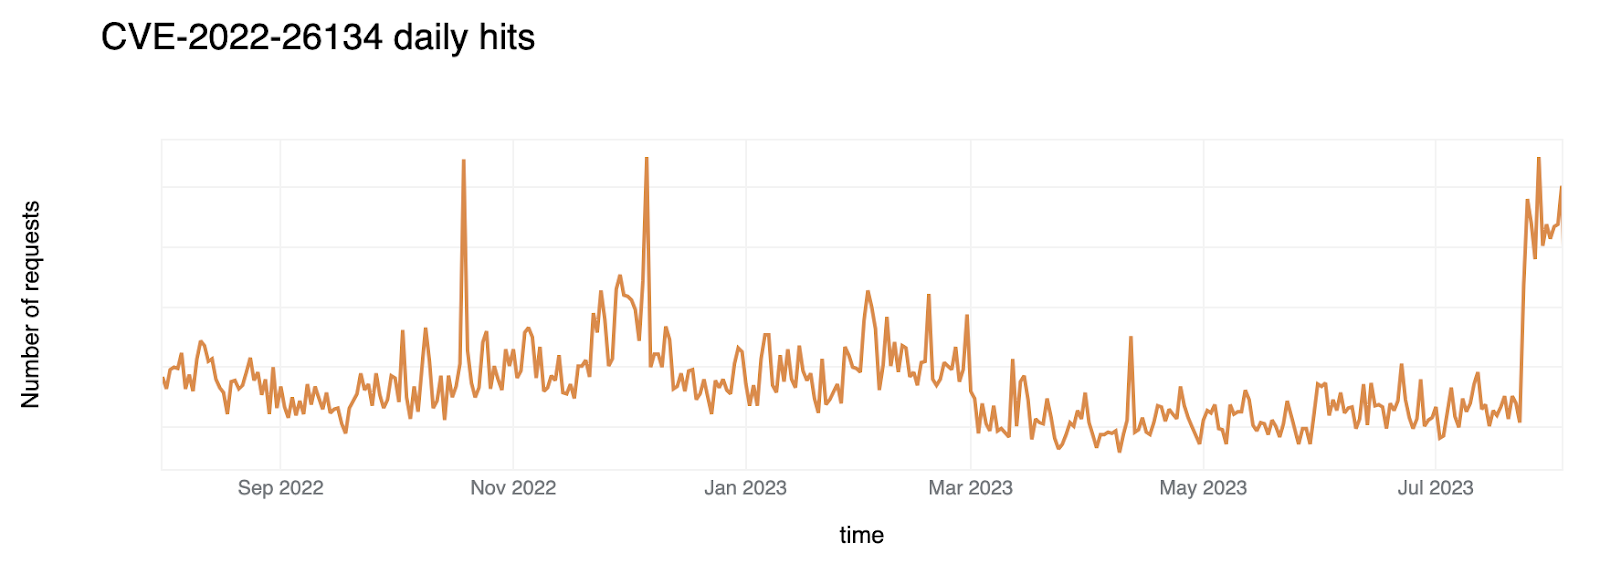 CVE-2022-26134 exploit attempt trend over the last year